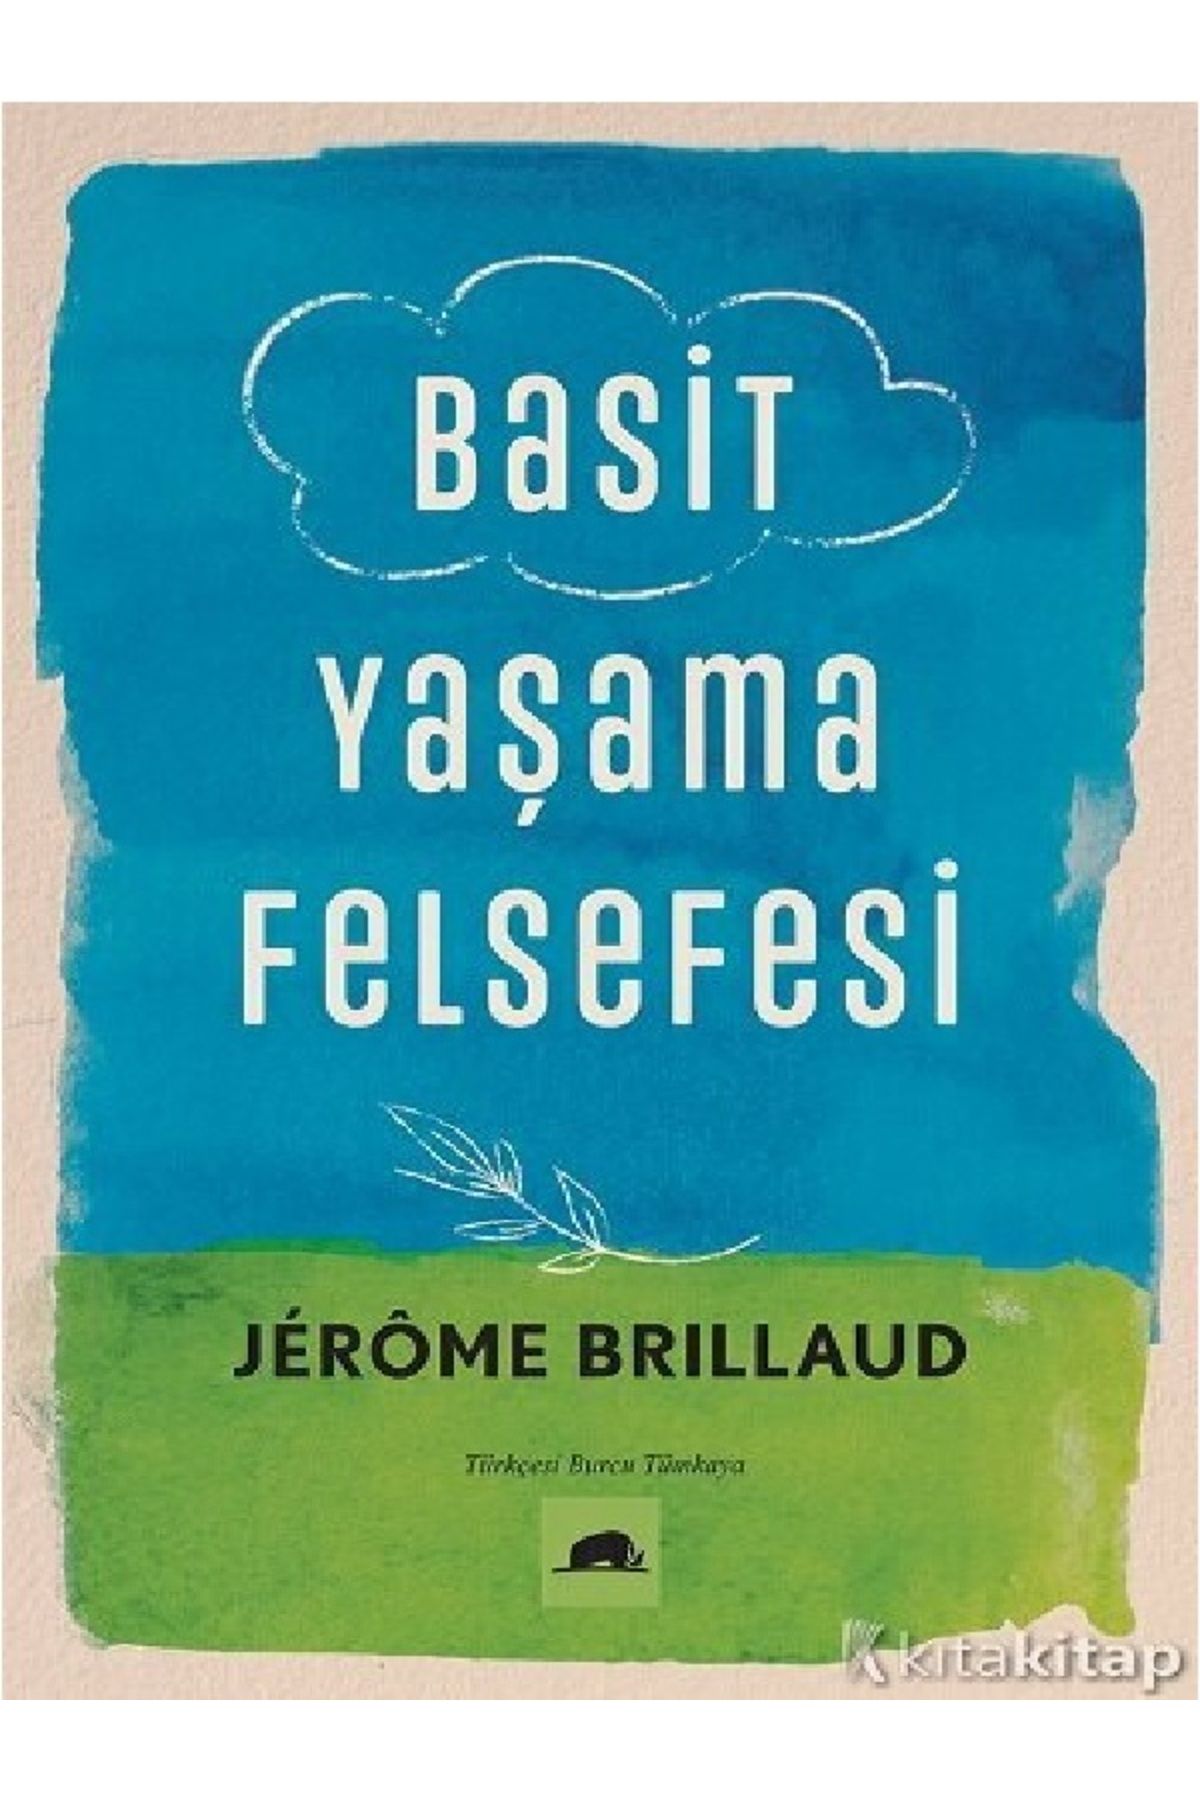 Kronik Kitap Basit Yaşama Felsefesi - Jerome Brillaud